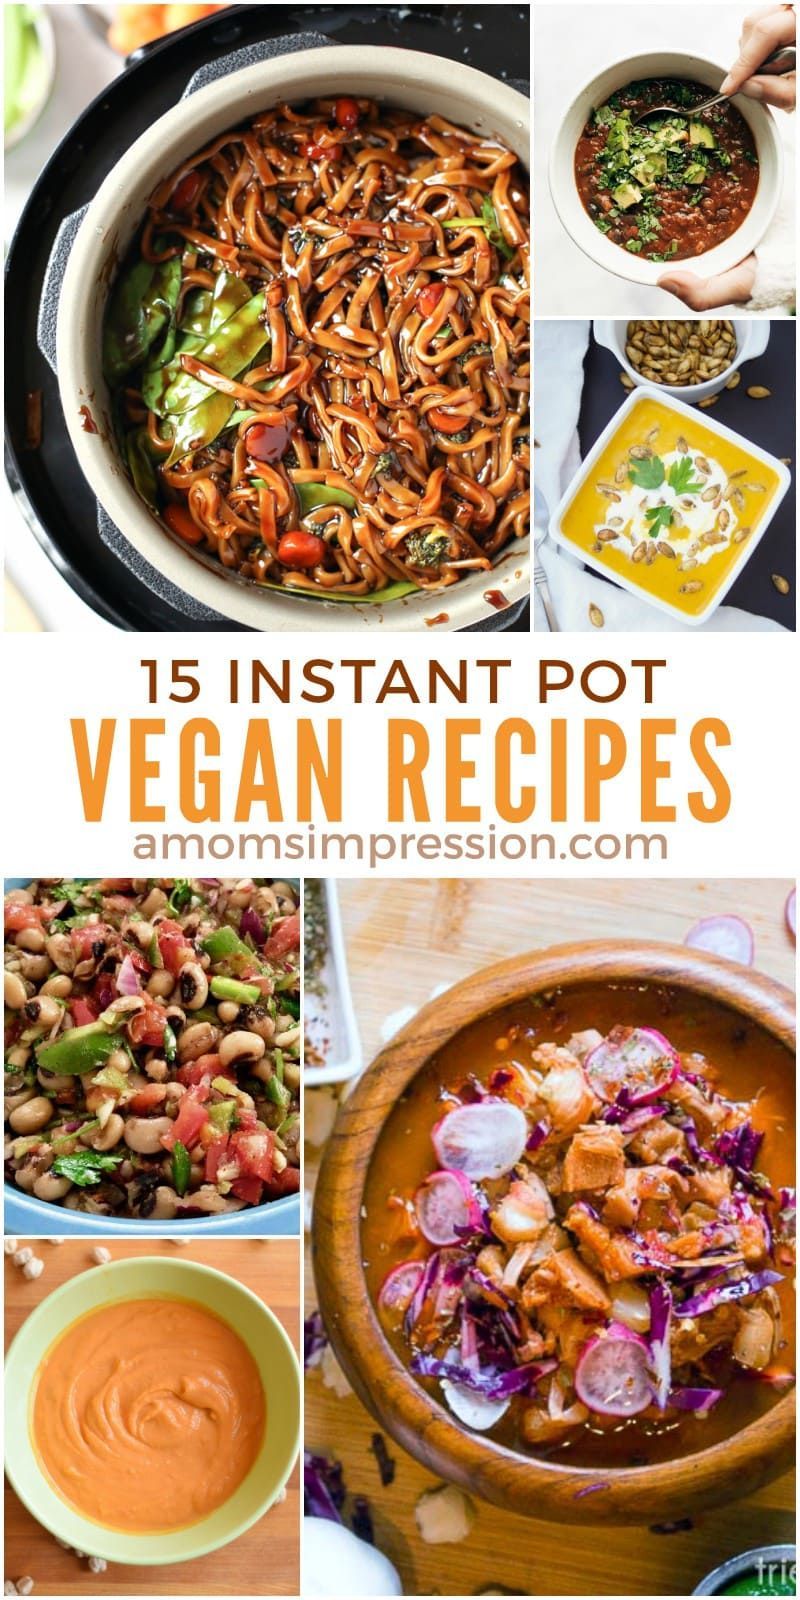 19 instant pot recipes healthy family vegetarian ideas